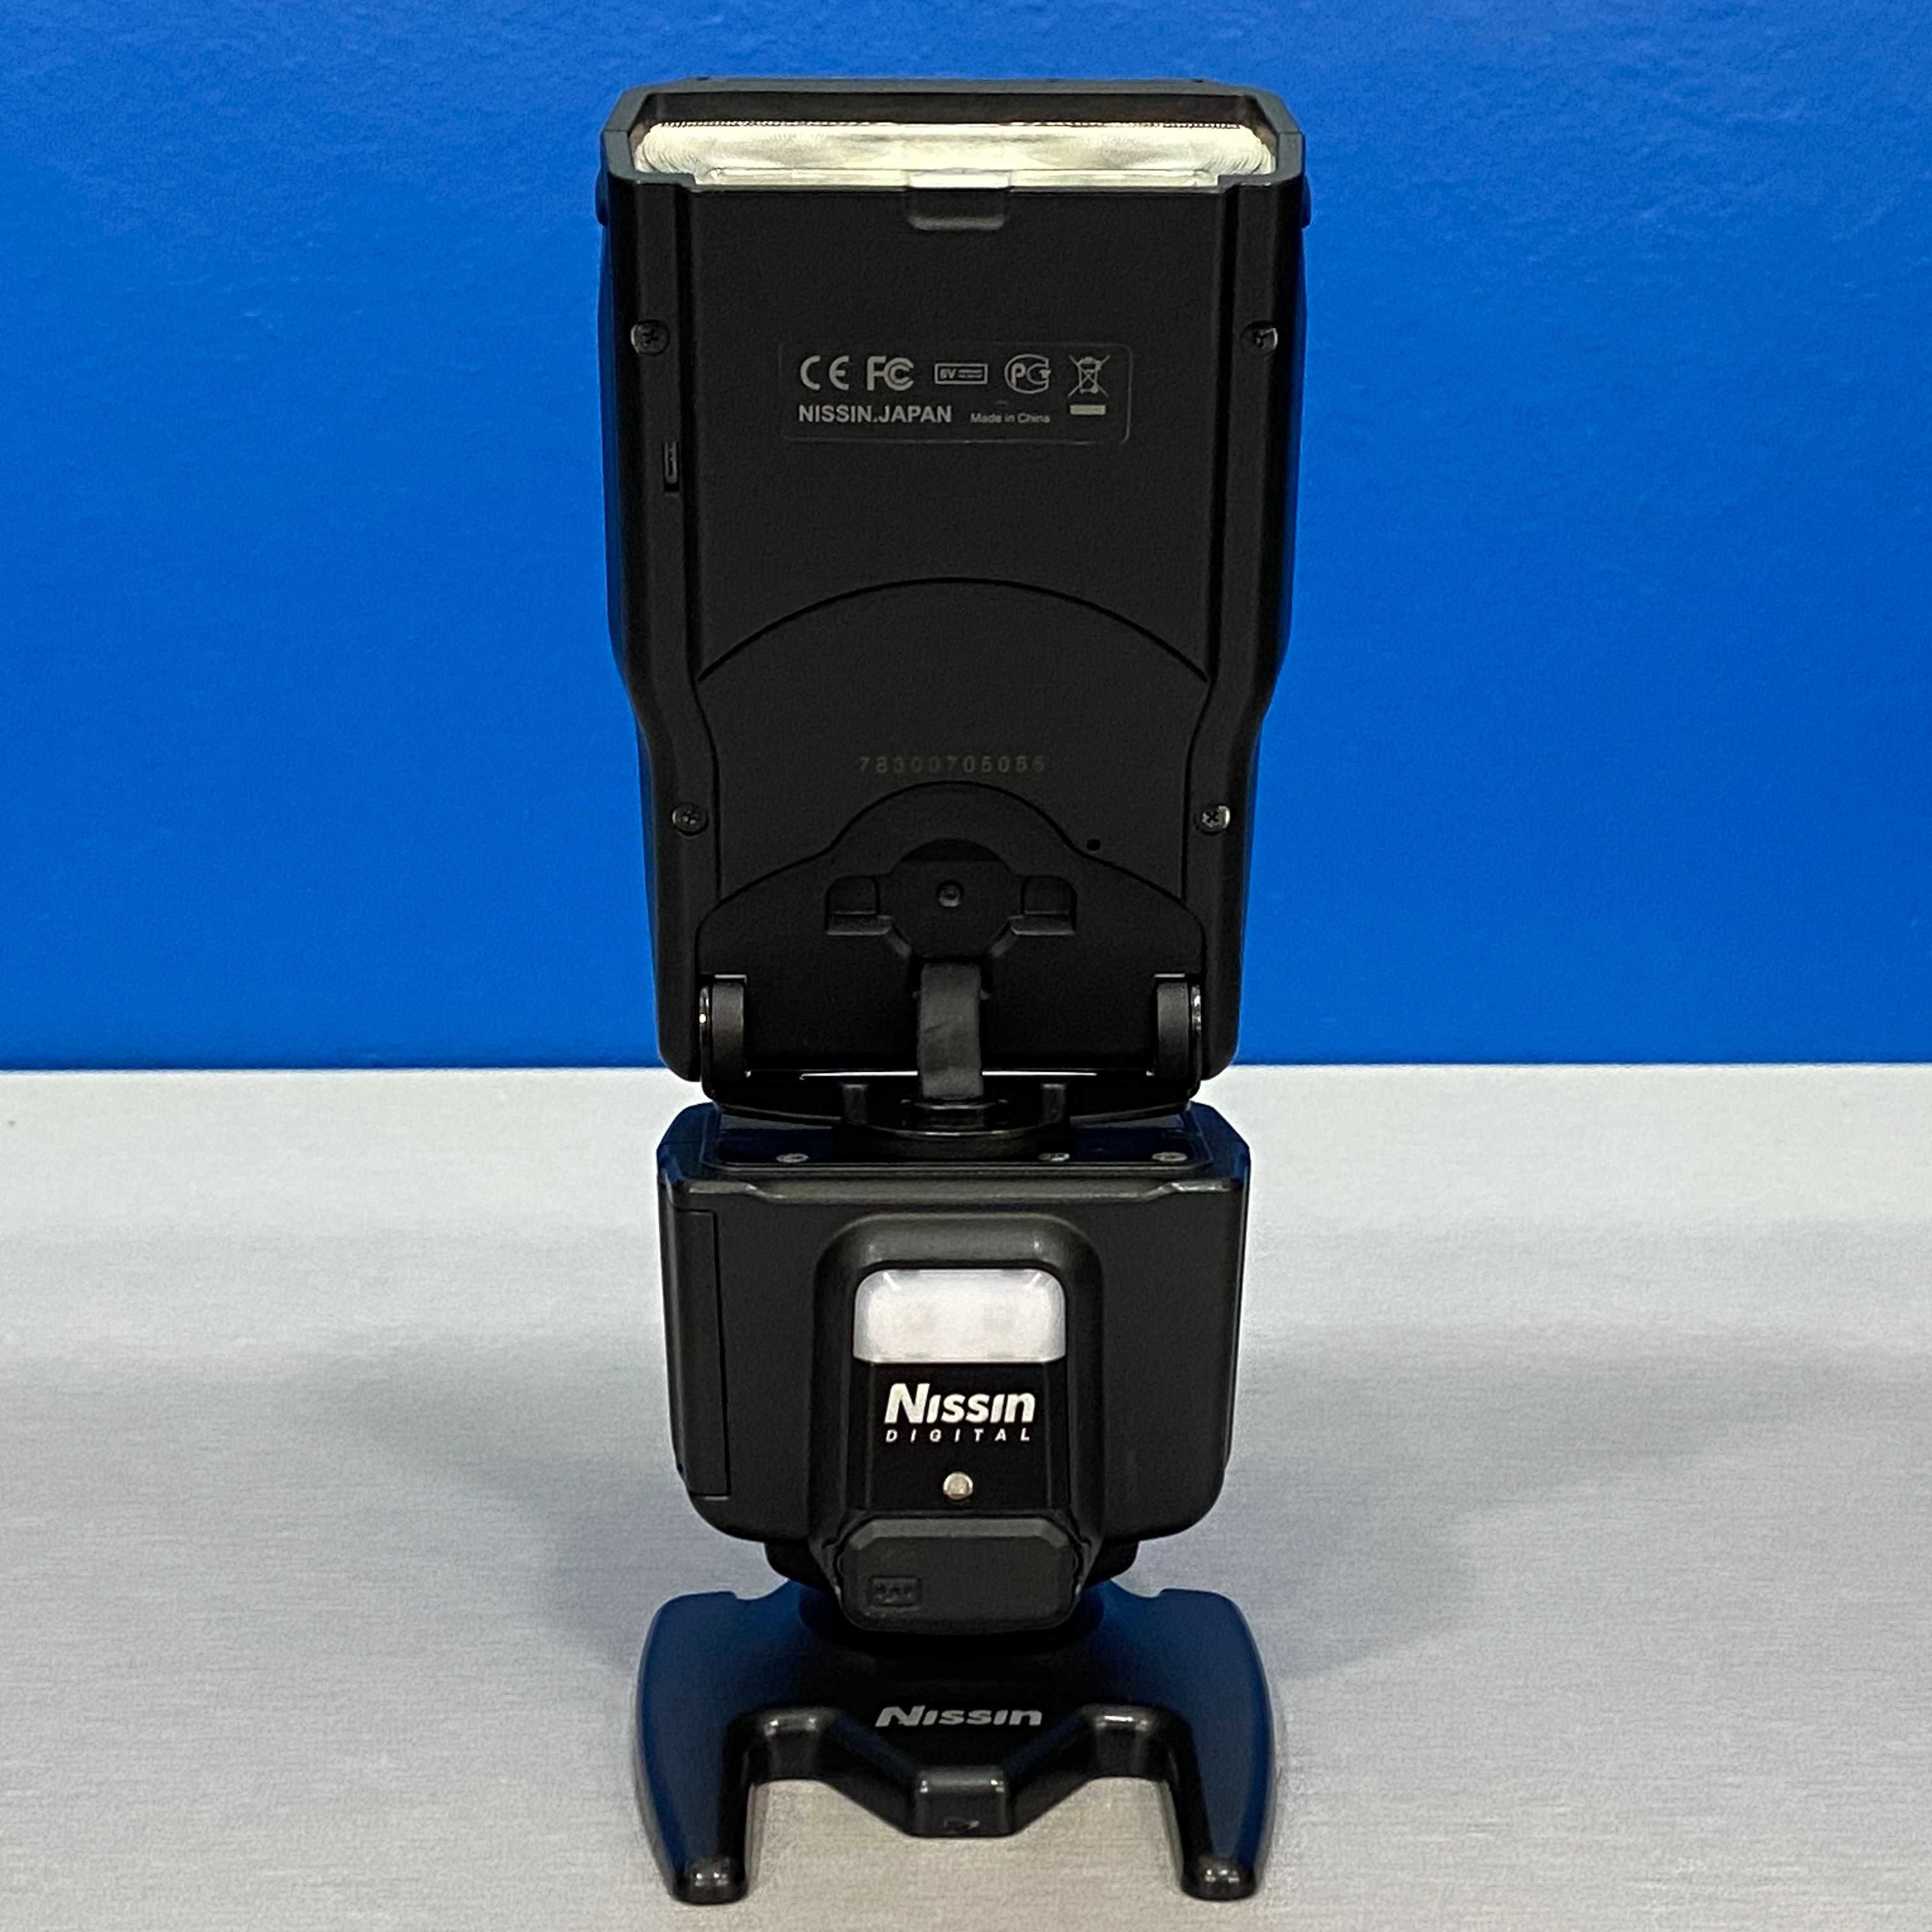 Nissin i60A (Fujifilm)